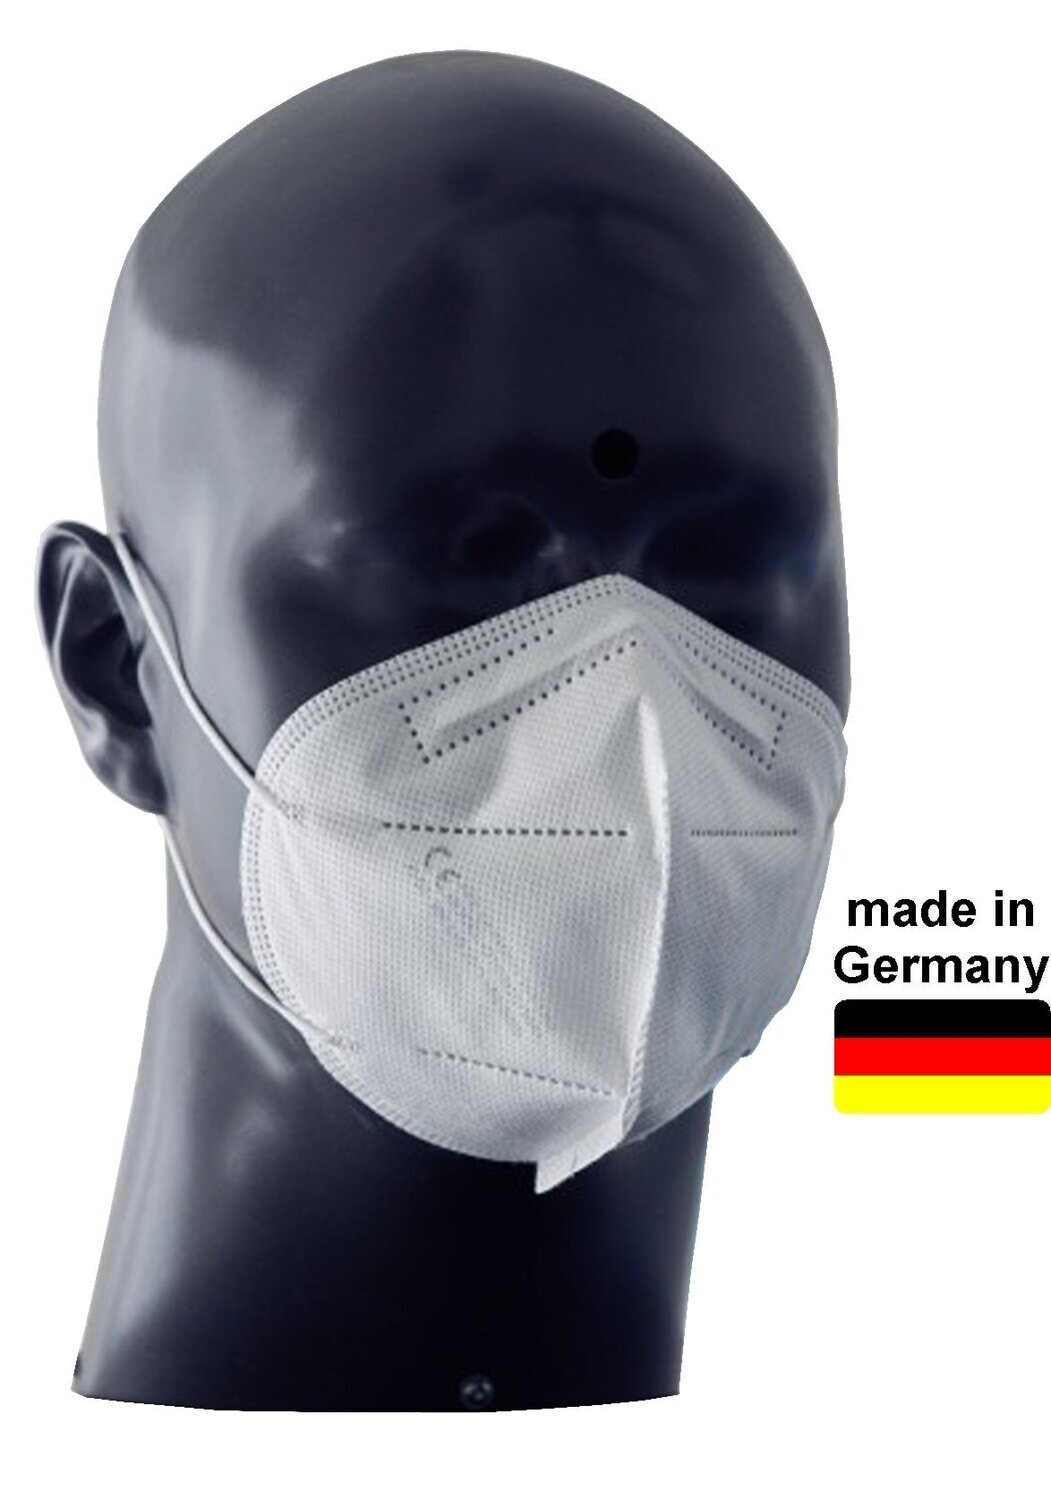 FFP2 Maske weiß
"Made in Germany"